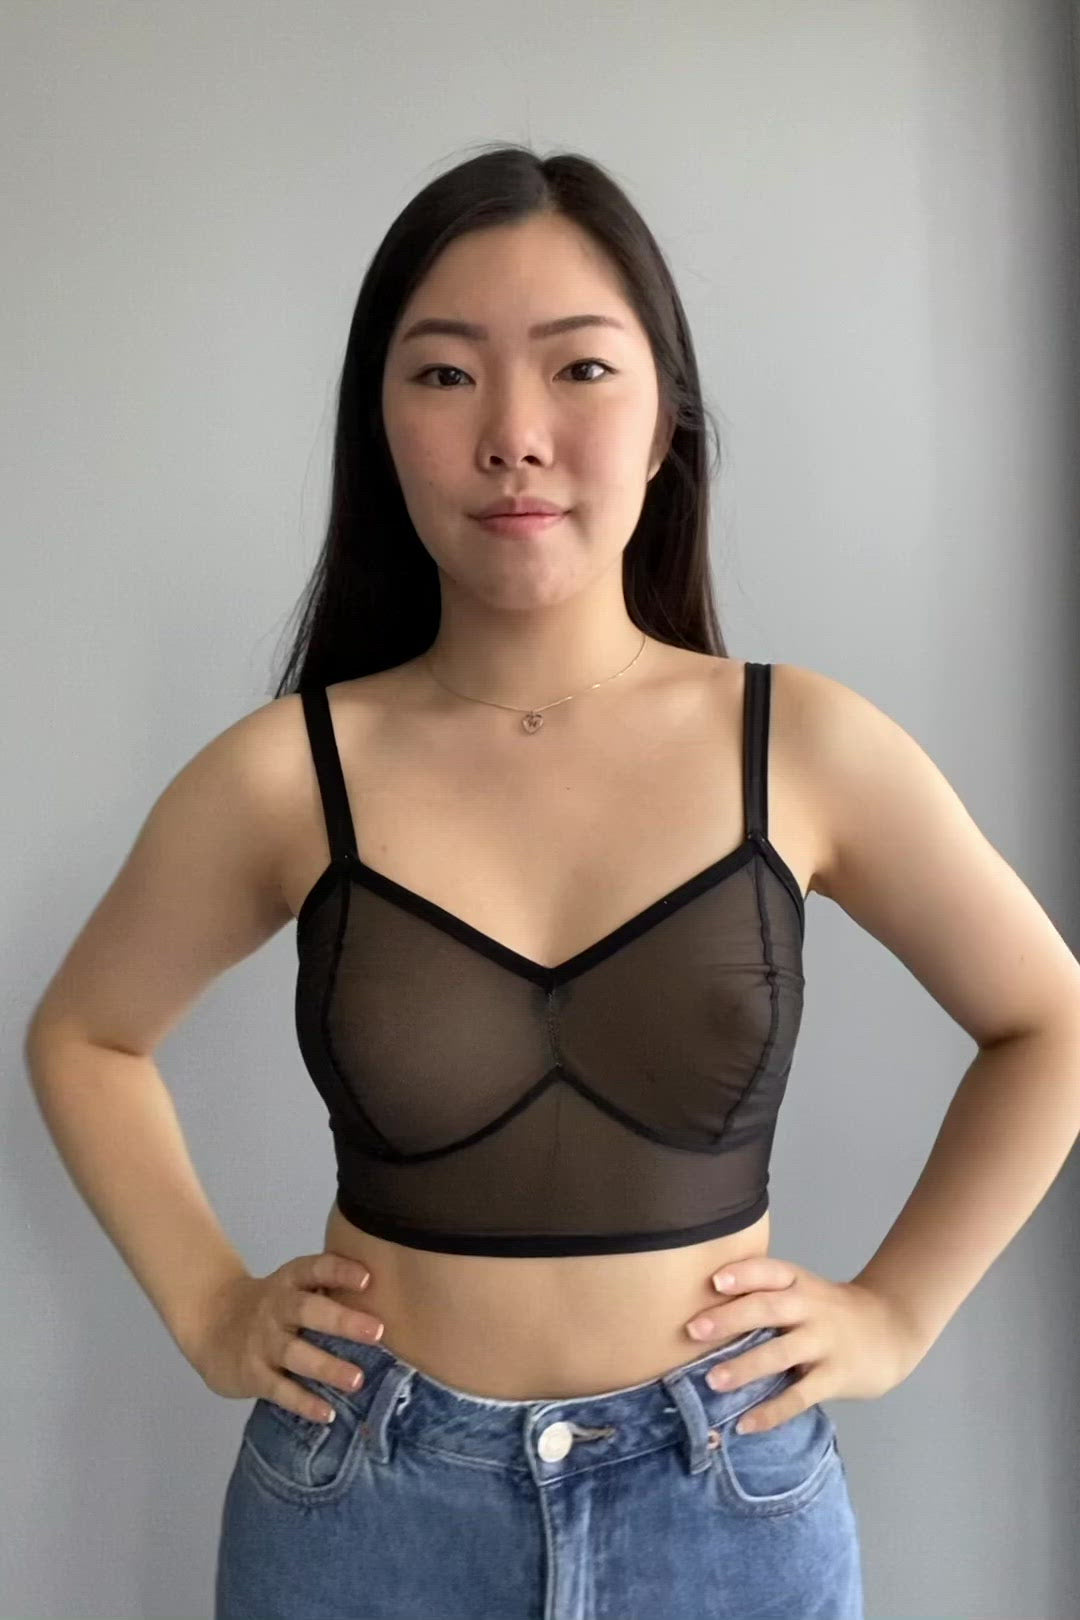 What coloured bra is best to wear under a sheer black fine mesh